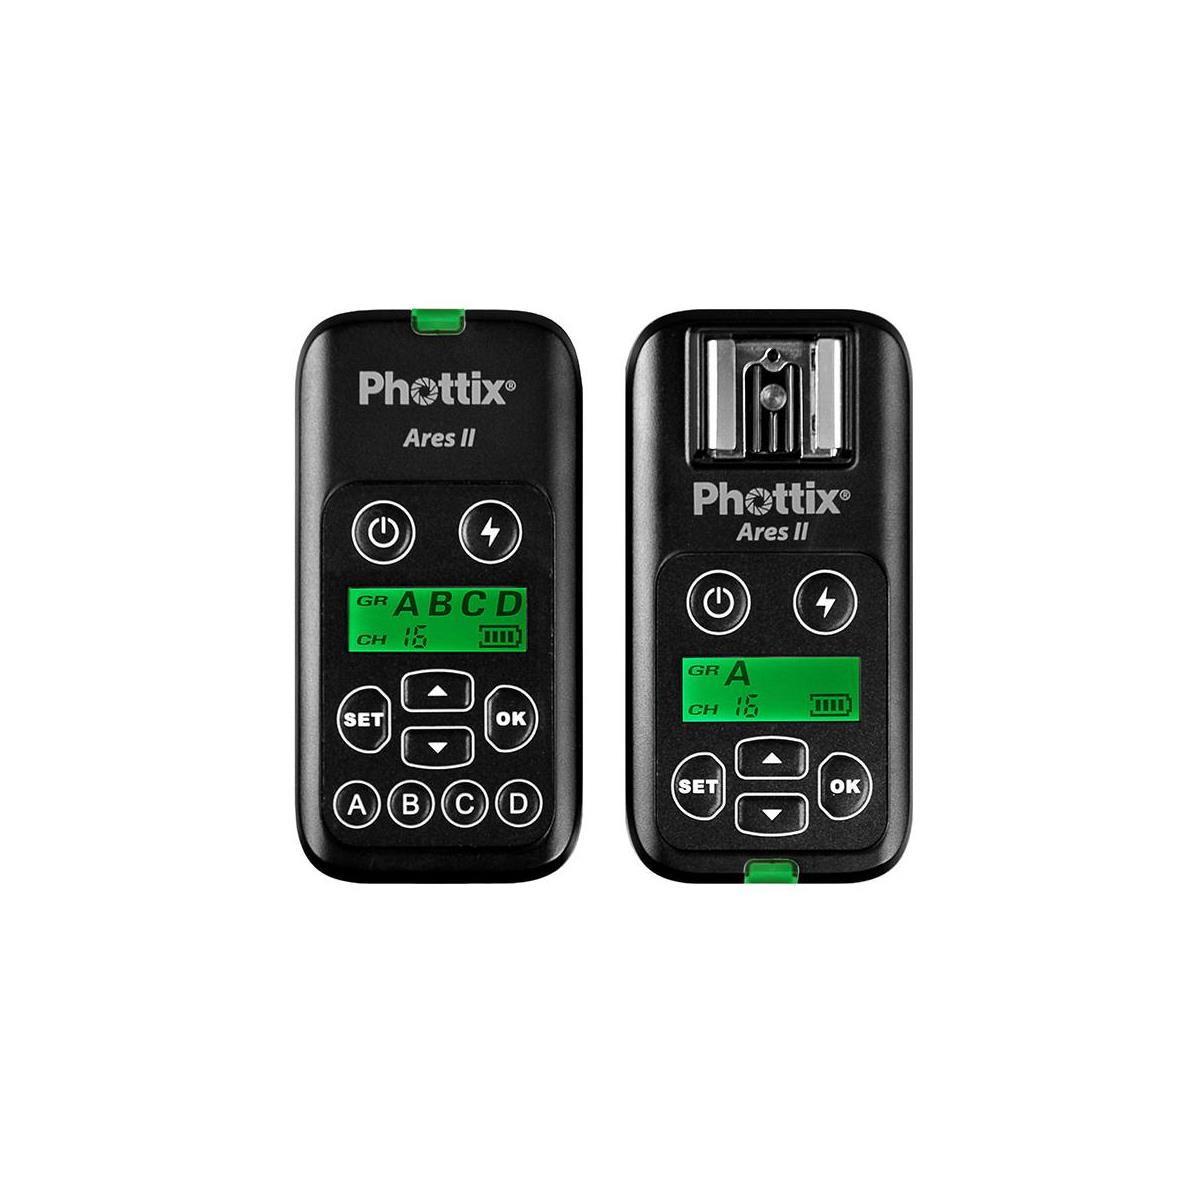 Phottix Ares II Wireless Flash Trigger